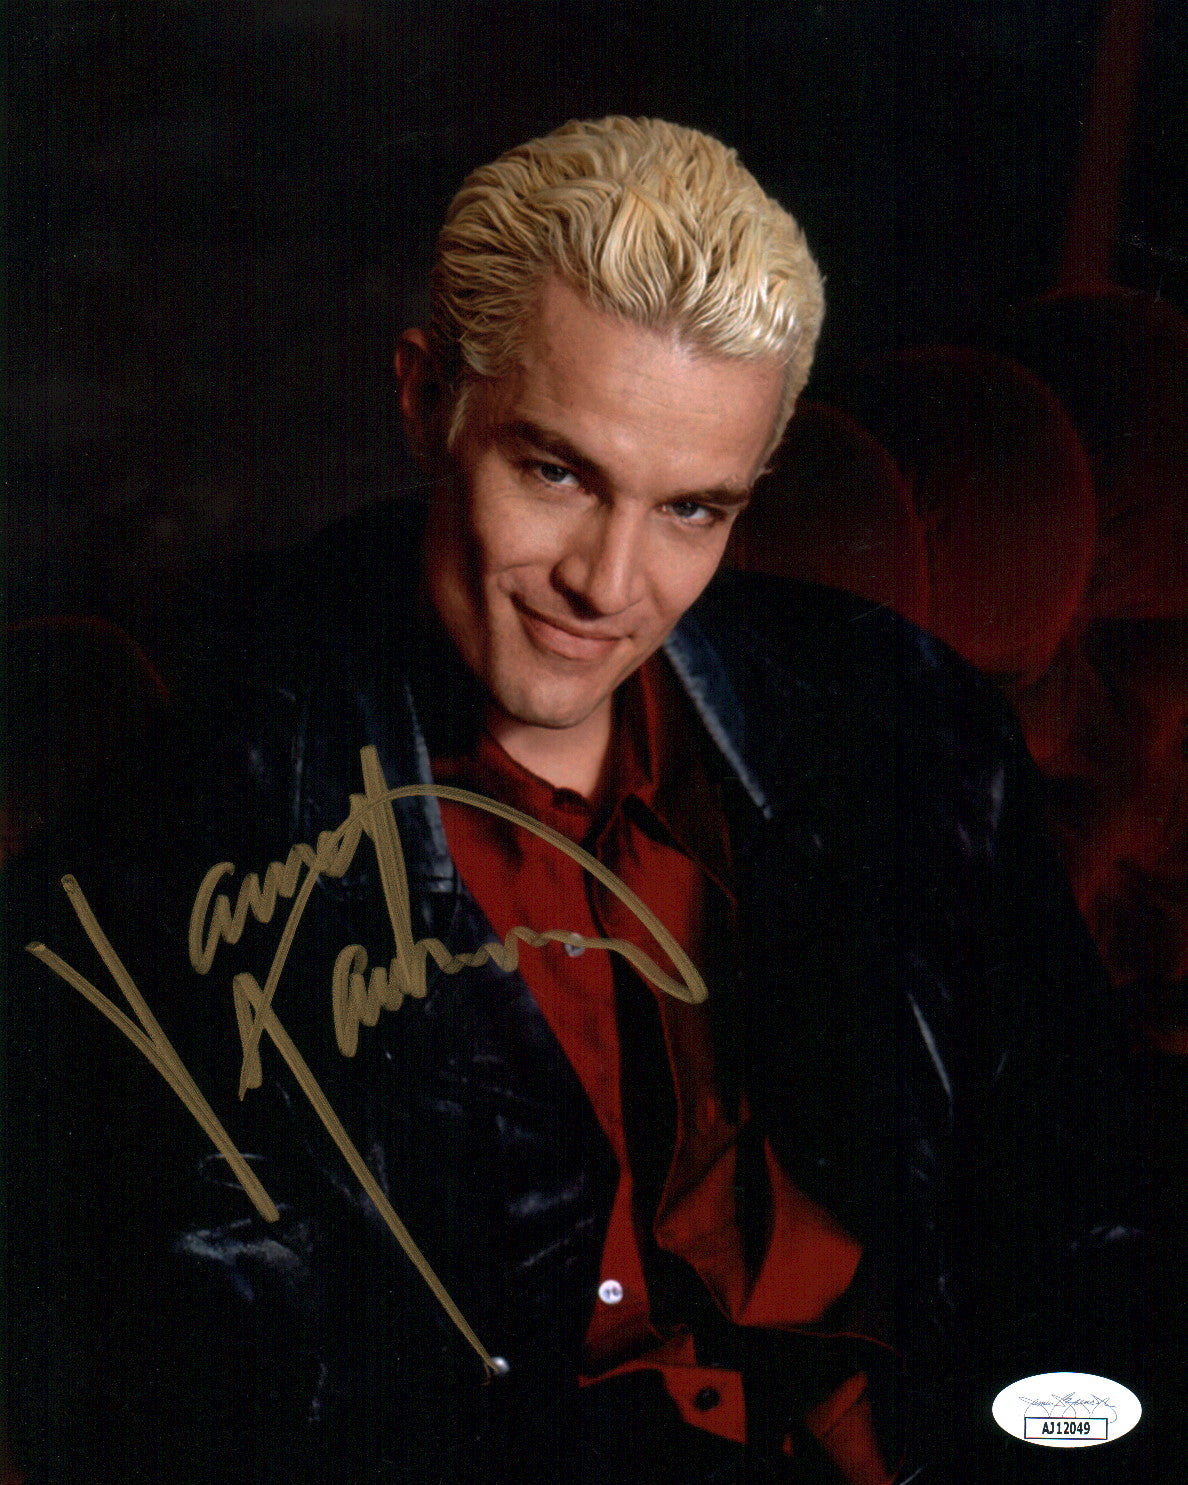 James Marsters Buffy the Vampire Slayer 8x10 Signed Photo JSA COA Certified Autograph